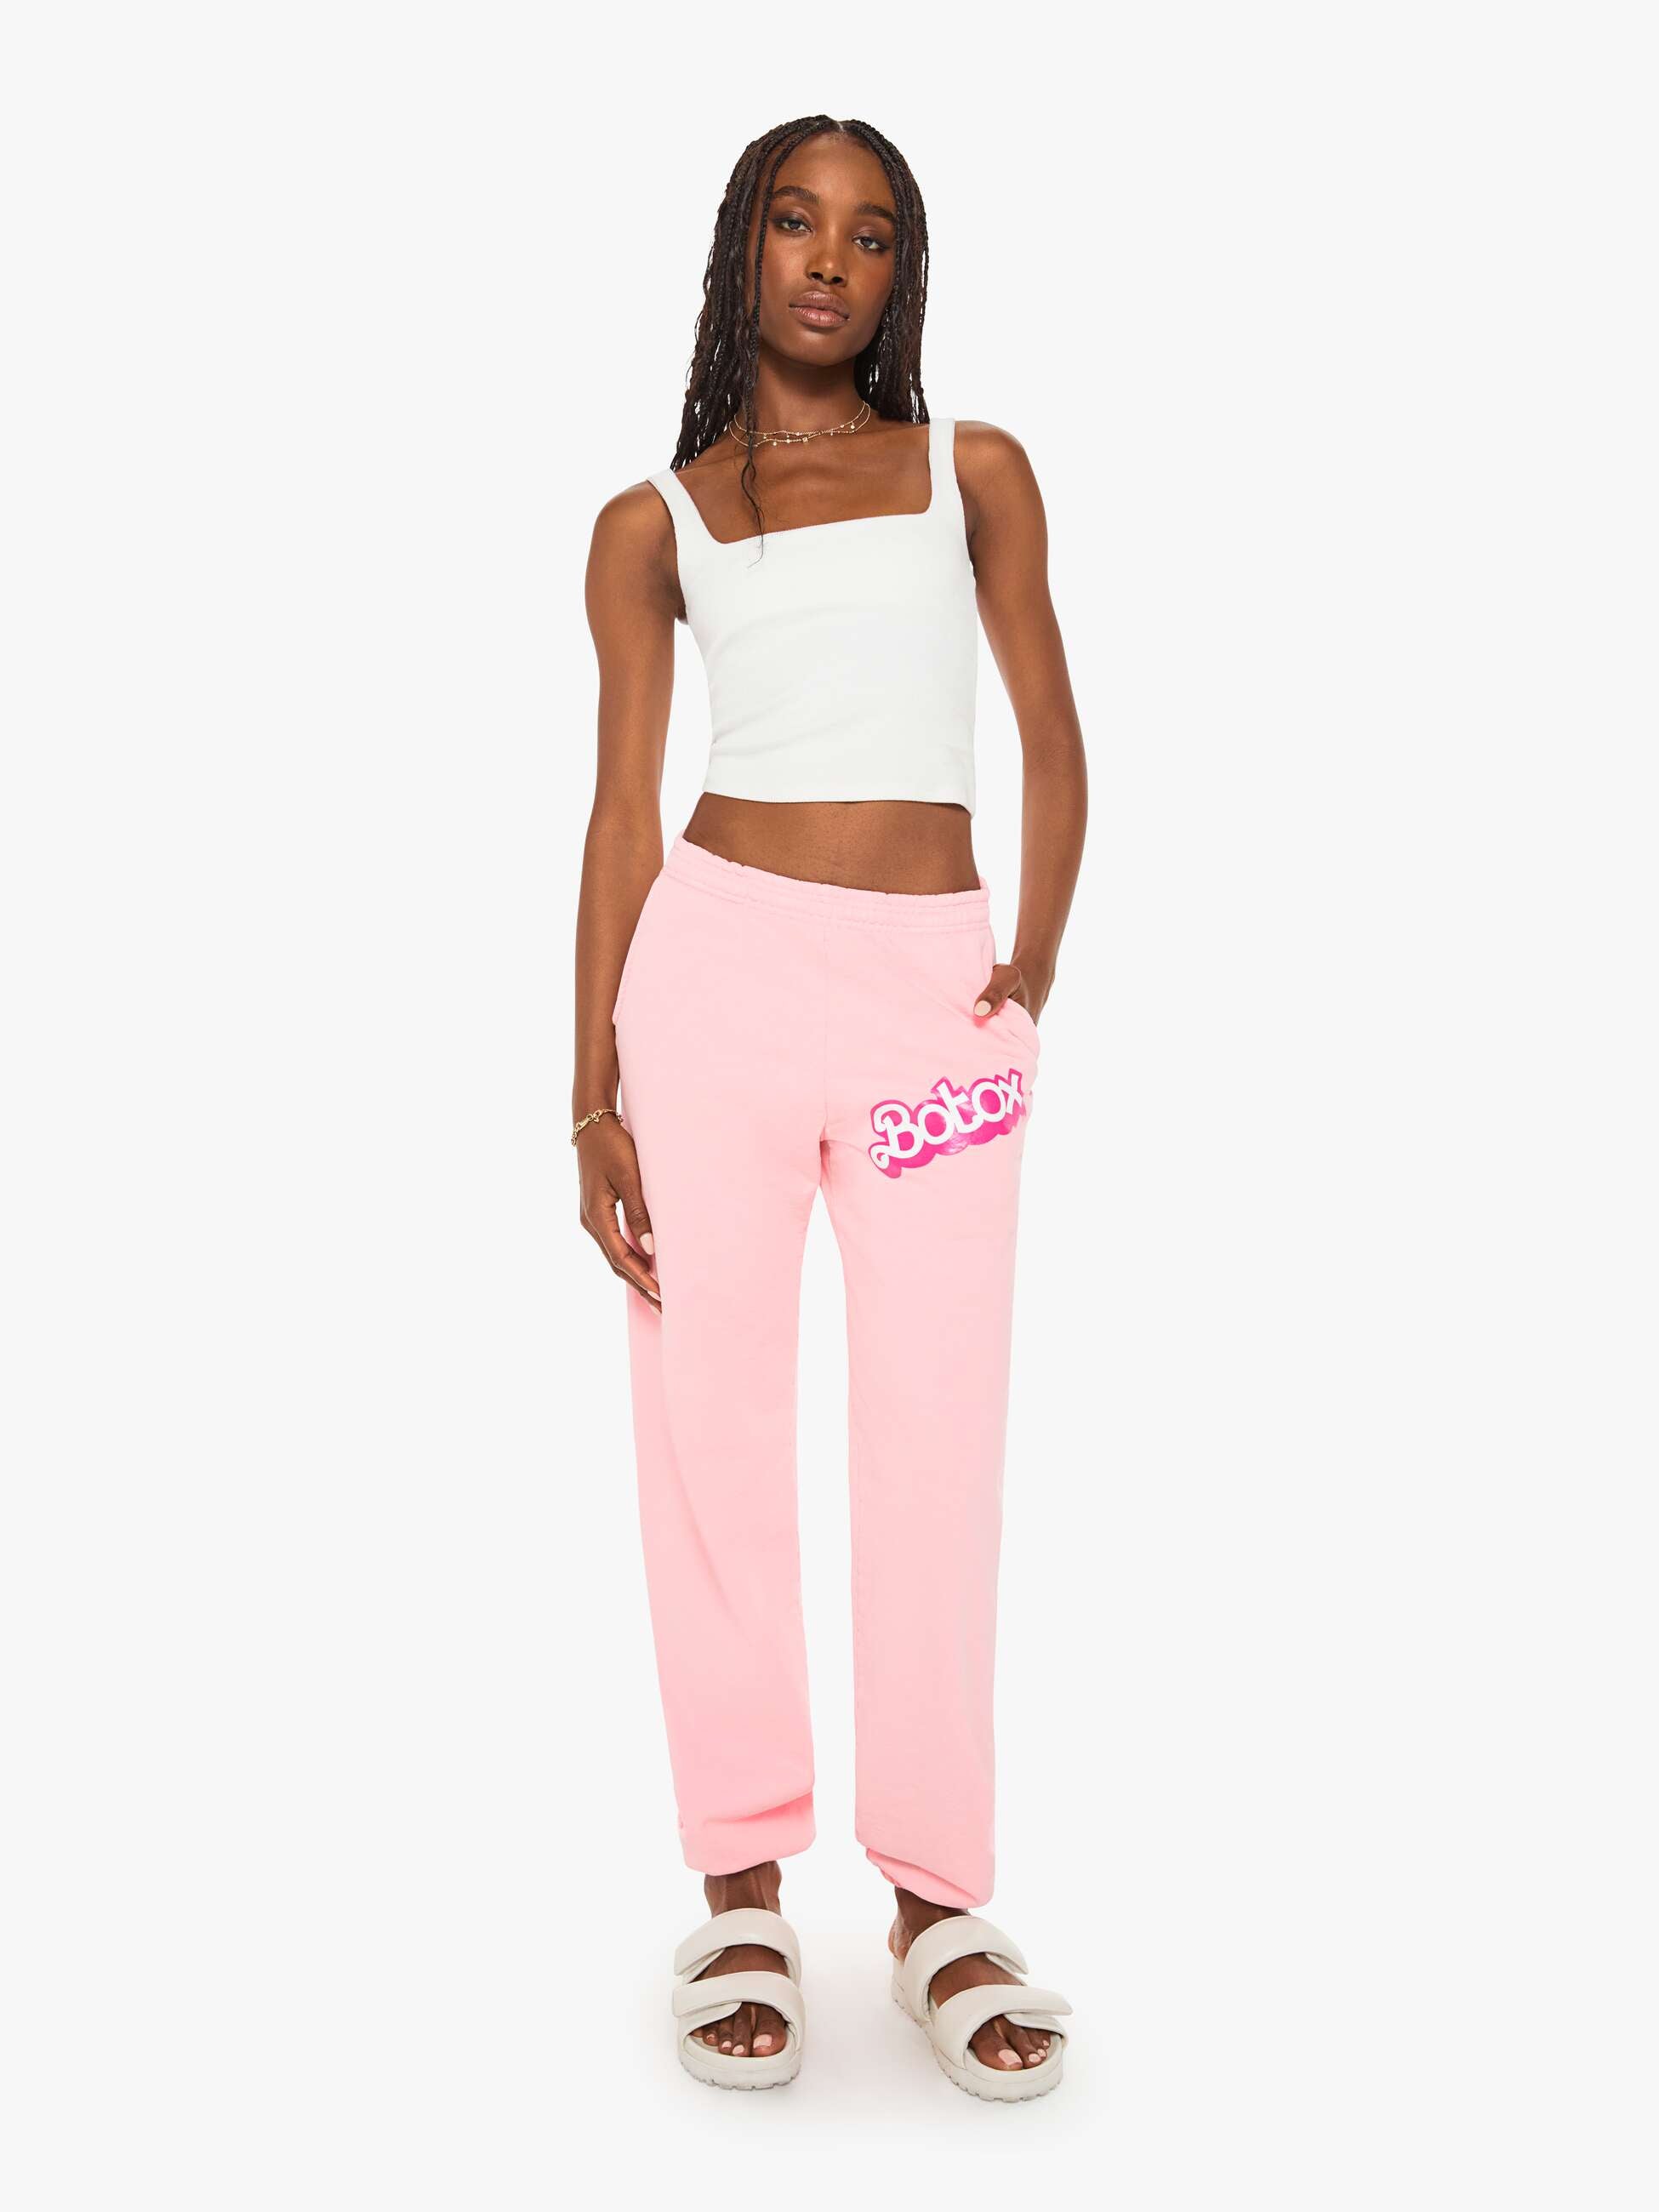 T.e.t.o Freshman Pink Sweat Pants - T.e.t.o Clothing